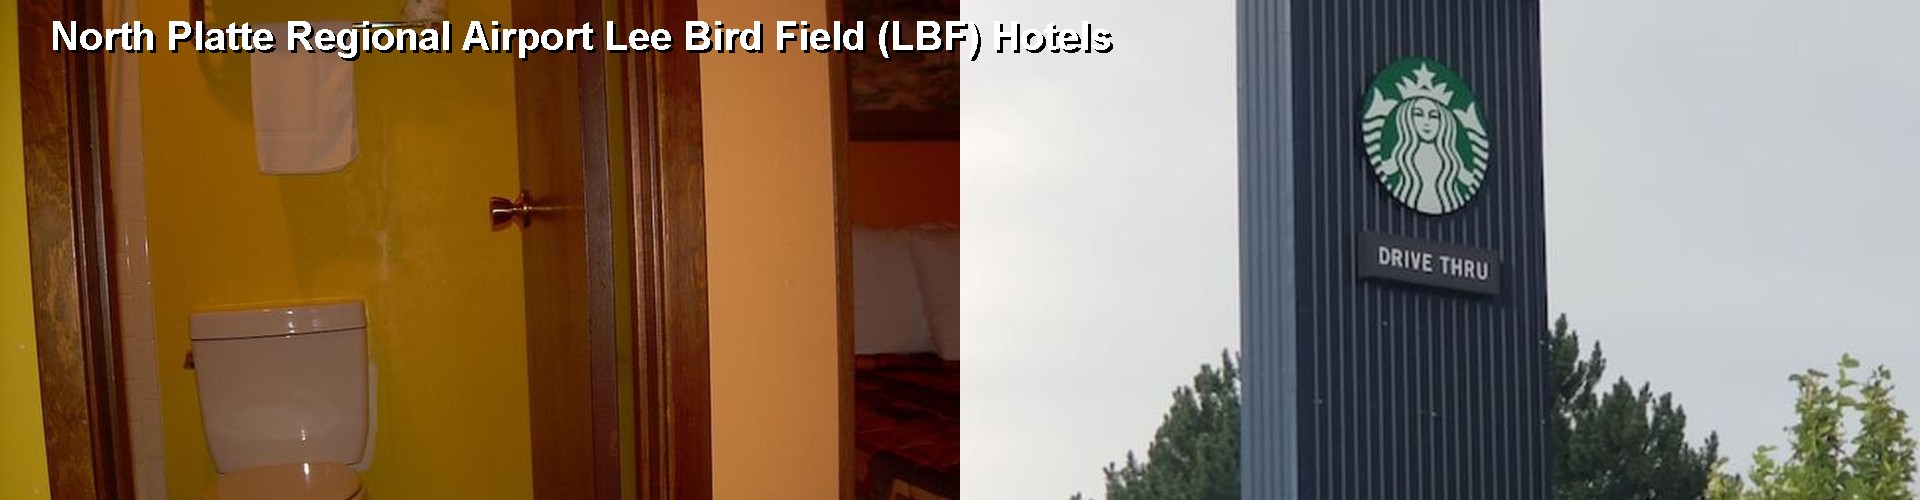 5 Best Hotels near North Platte Regional Airport Lee Bird Field (LBF)